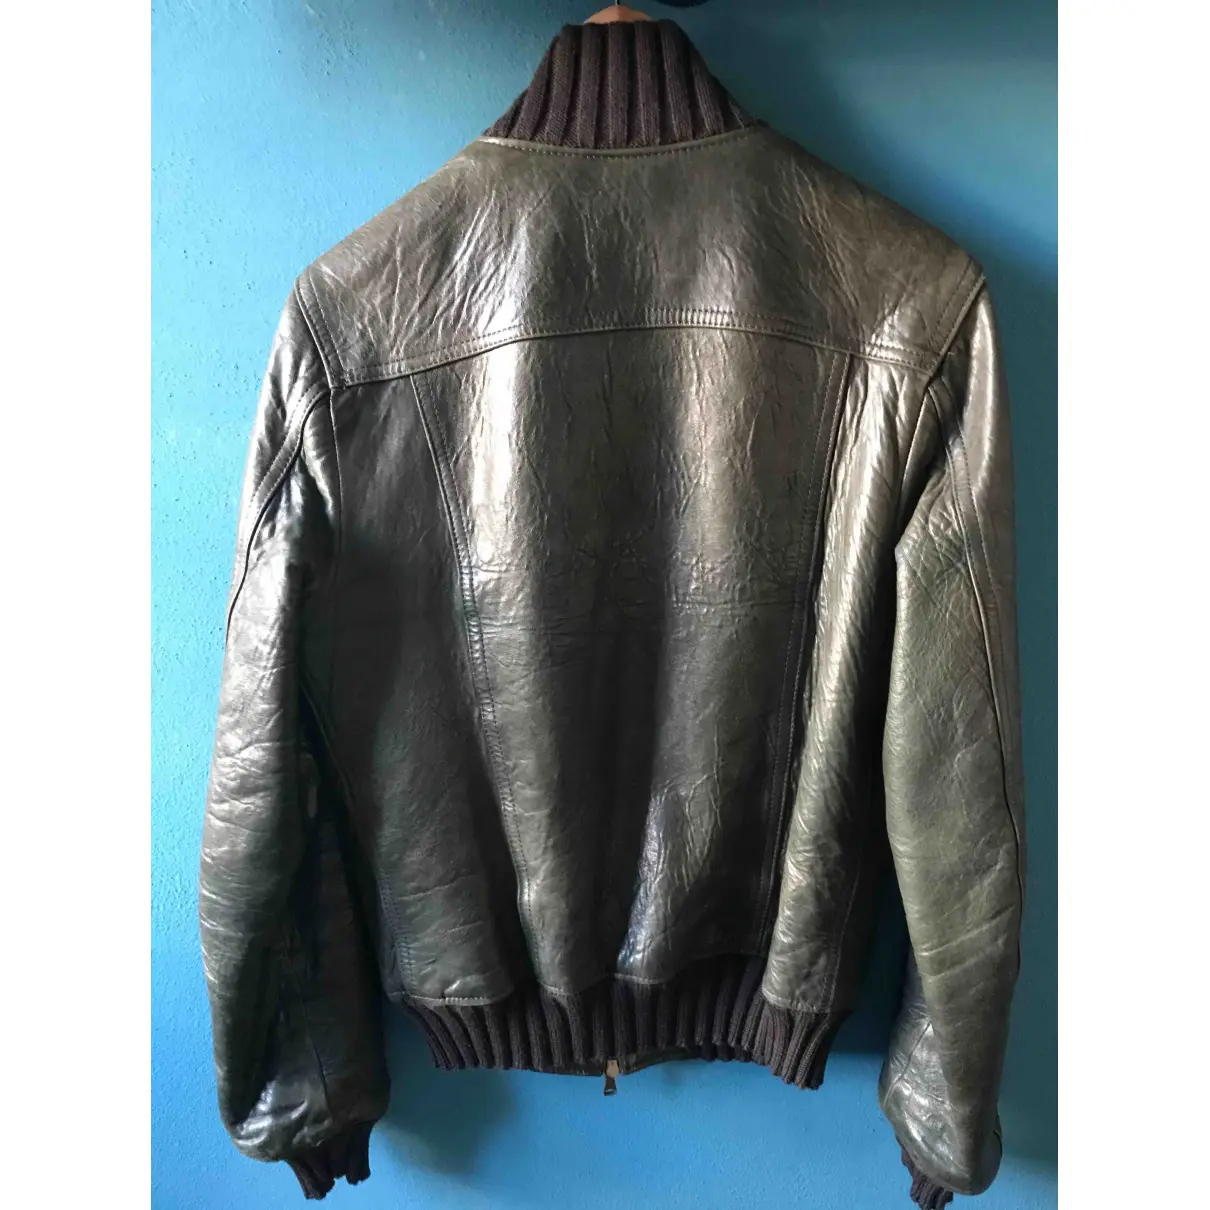 Buy Daniele Alessandrini Leather jacket online